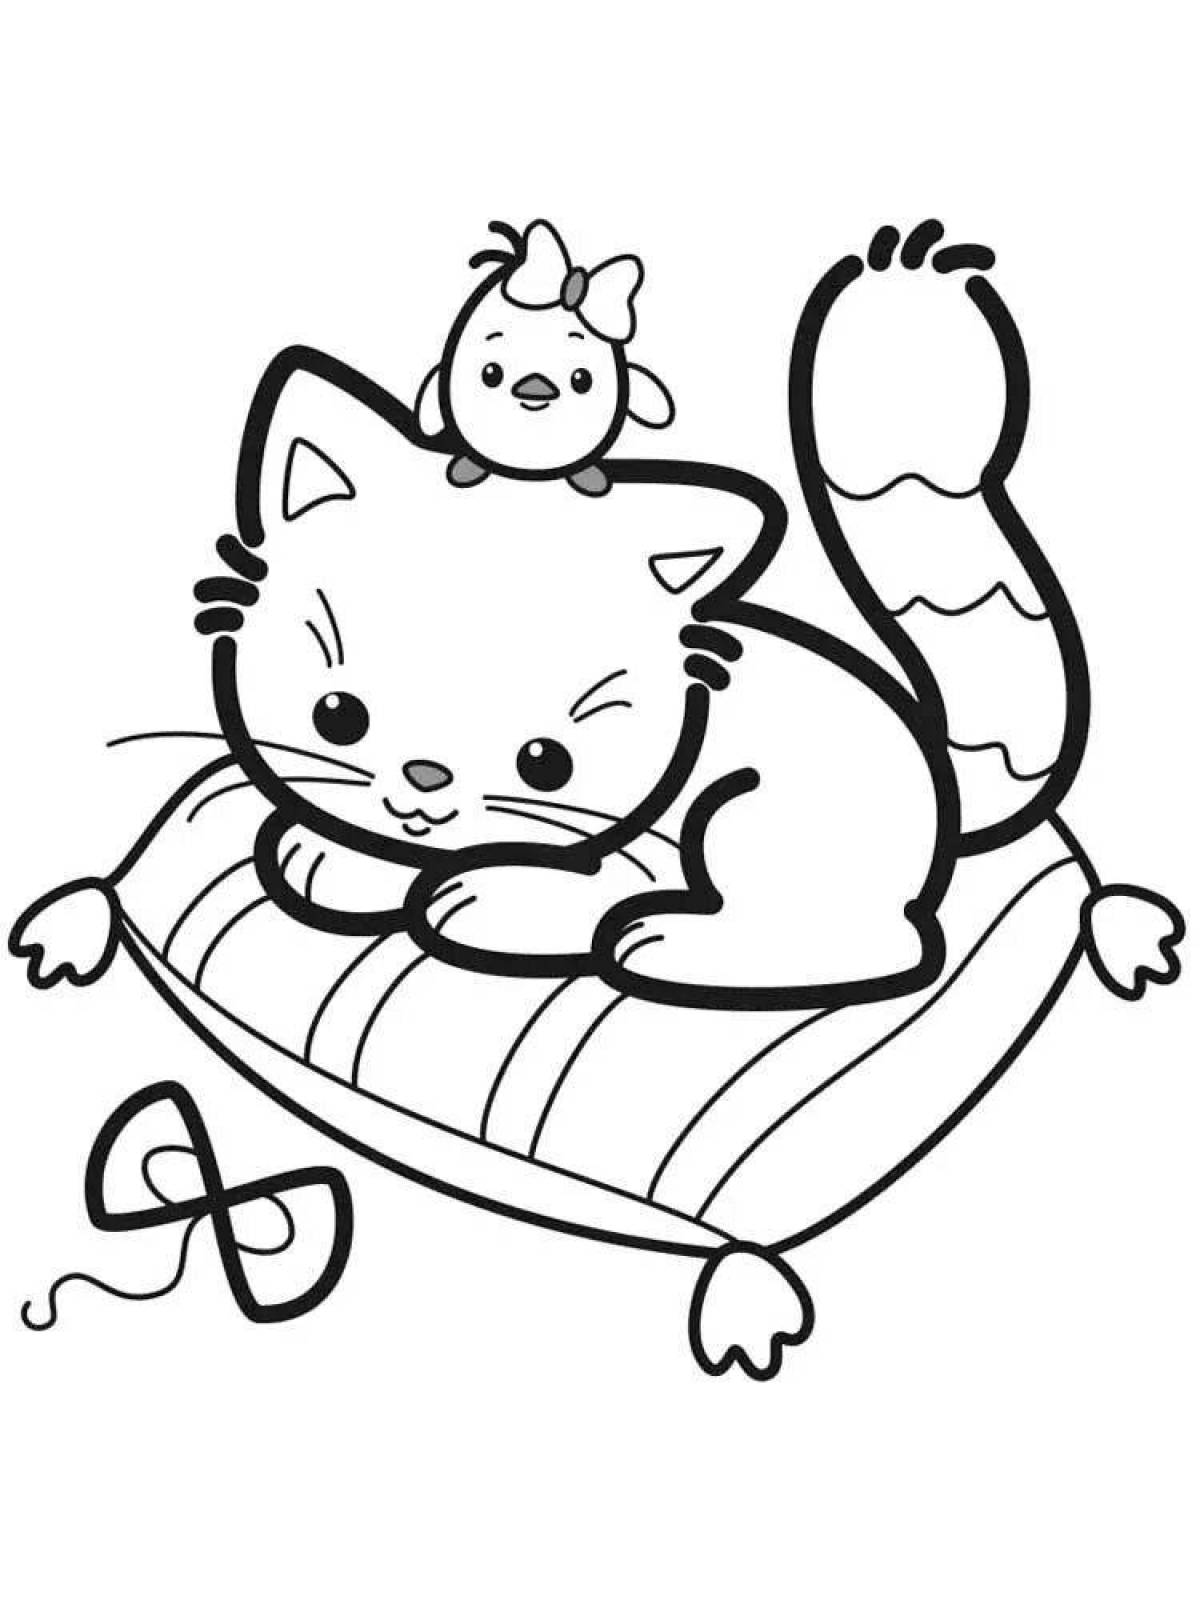 Fun kitty coloring book for kids